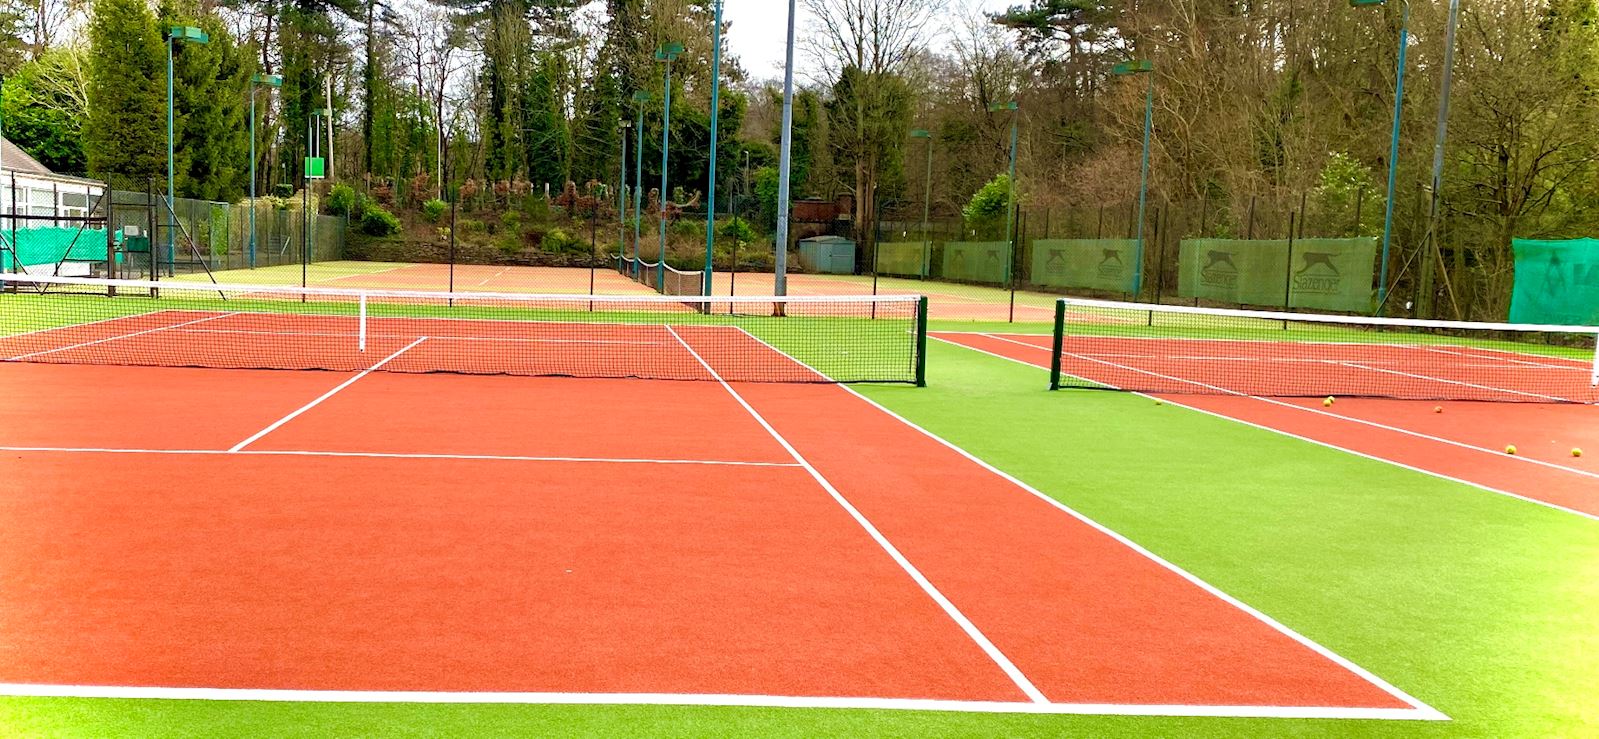 Bramhall Park Lawn Tennis Club / Bramhall park lawn tennis club